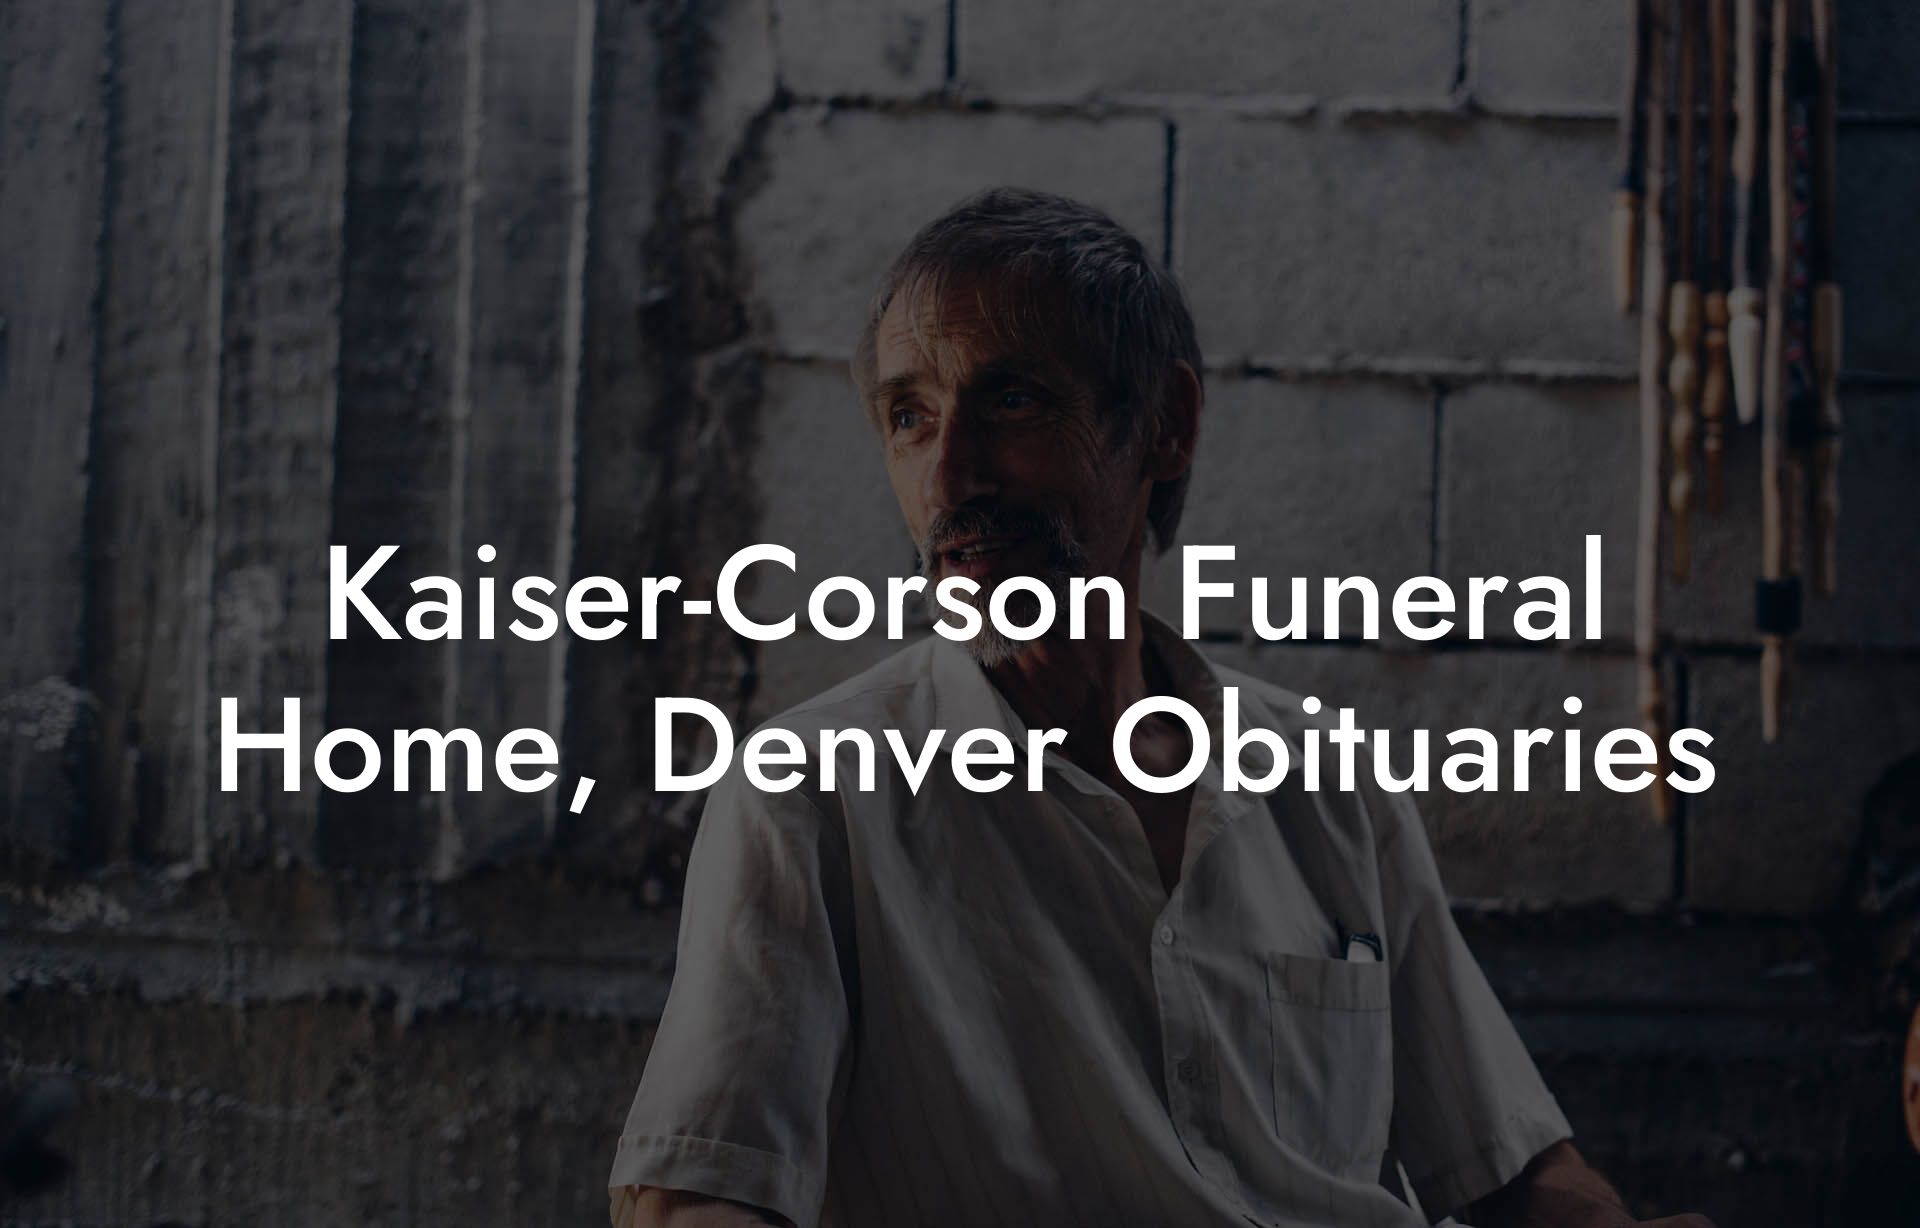 Kaiser-Corson Funeral Home, Denver Obituaries